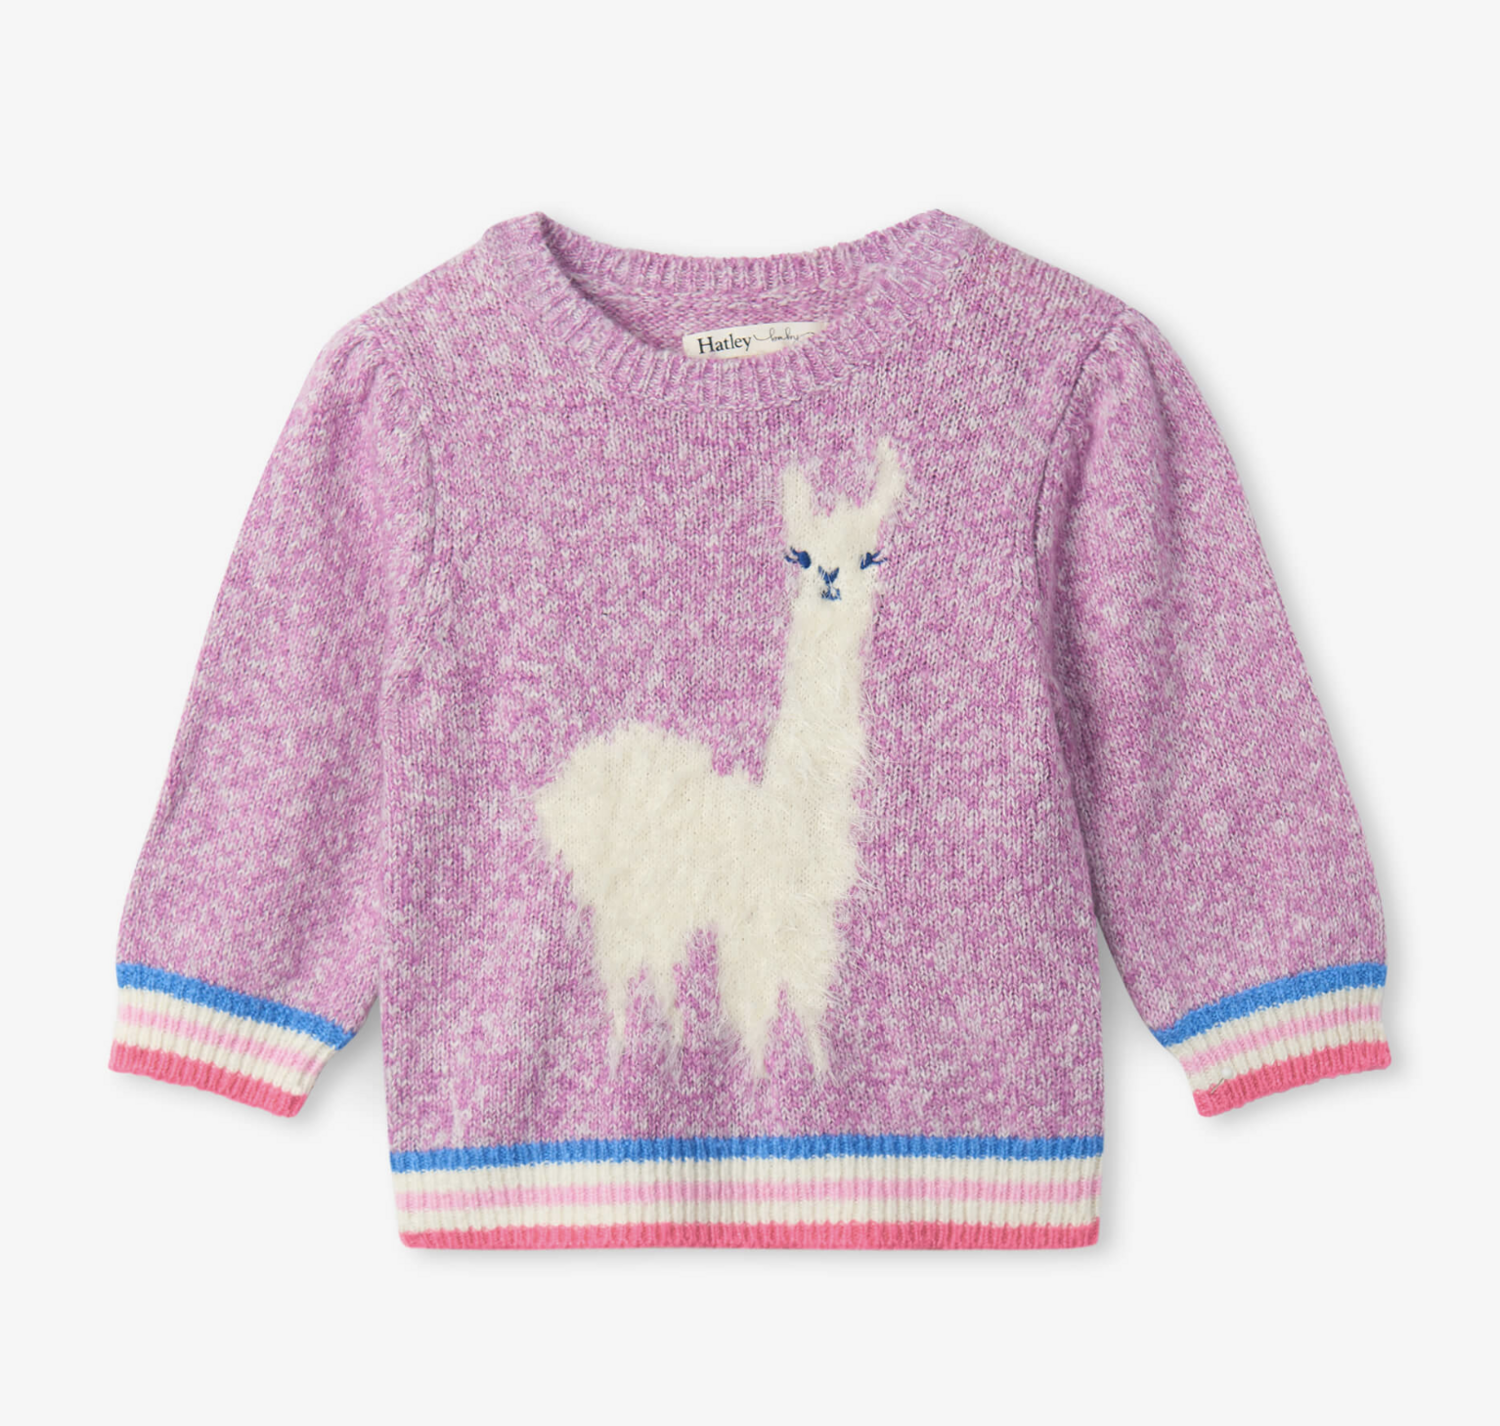 Adorable Alpaca baby sweater